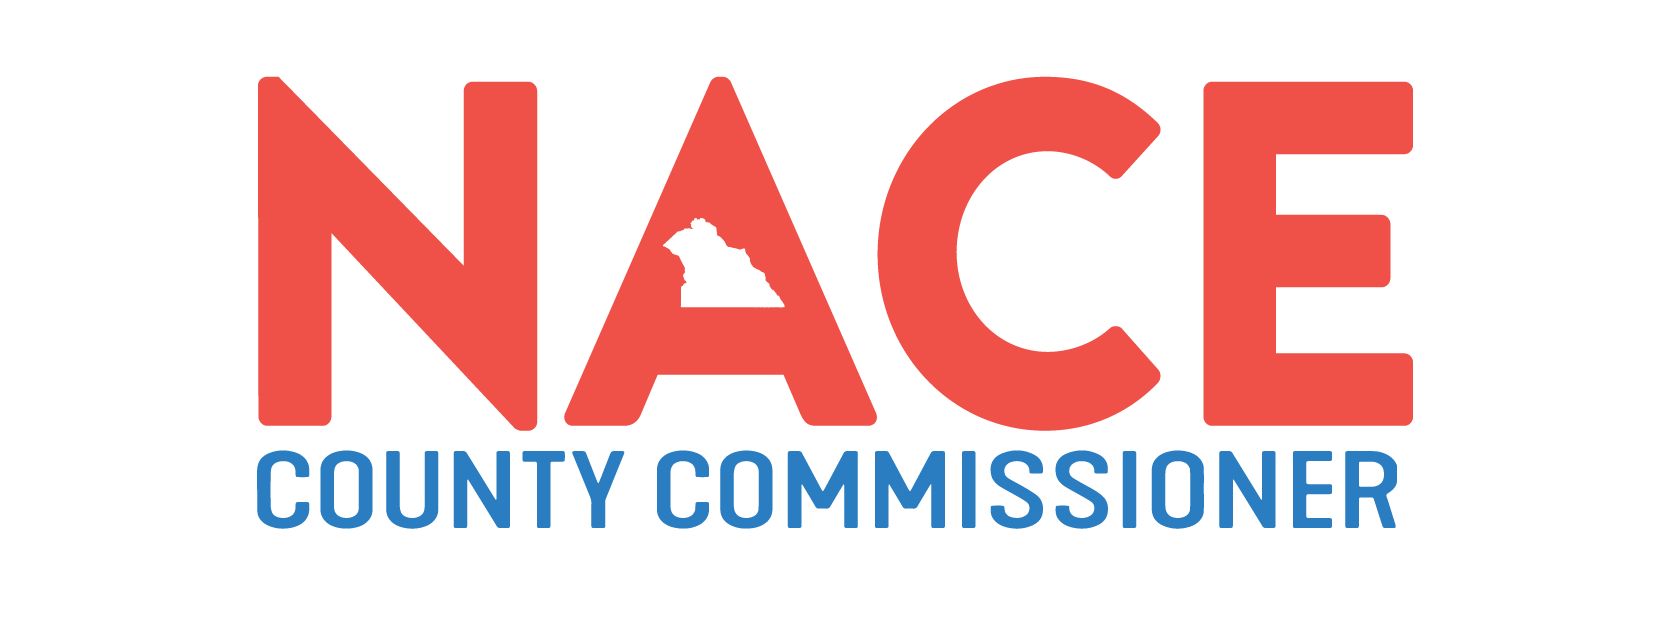 Blanda Nace for York County logo